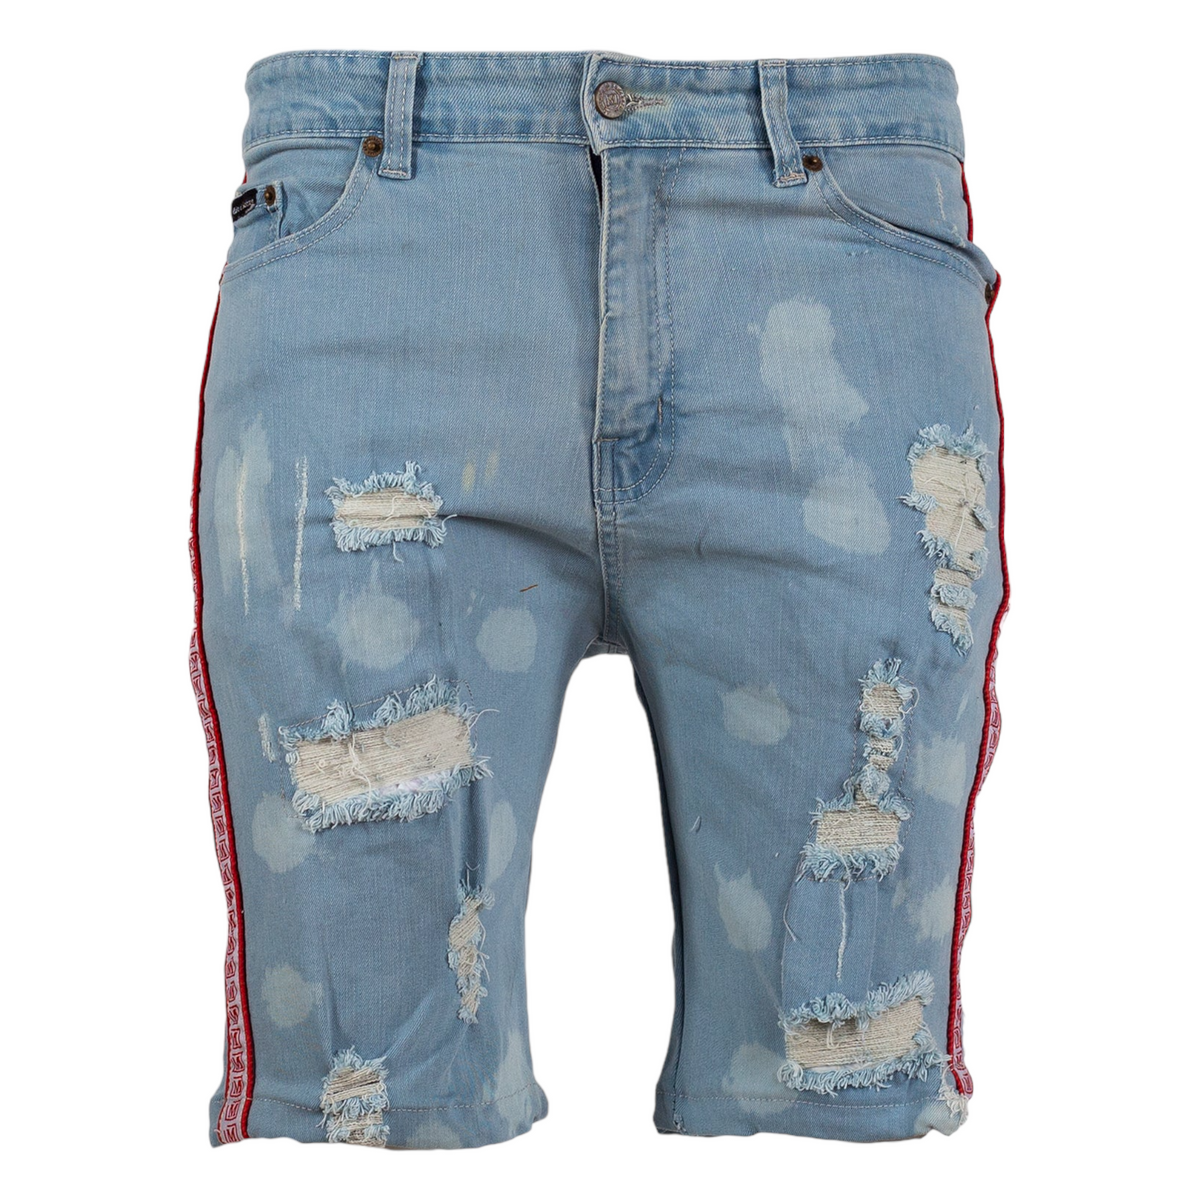 MDB Brand Men's Ripped Jean Shorts